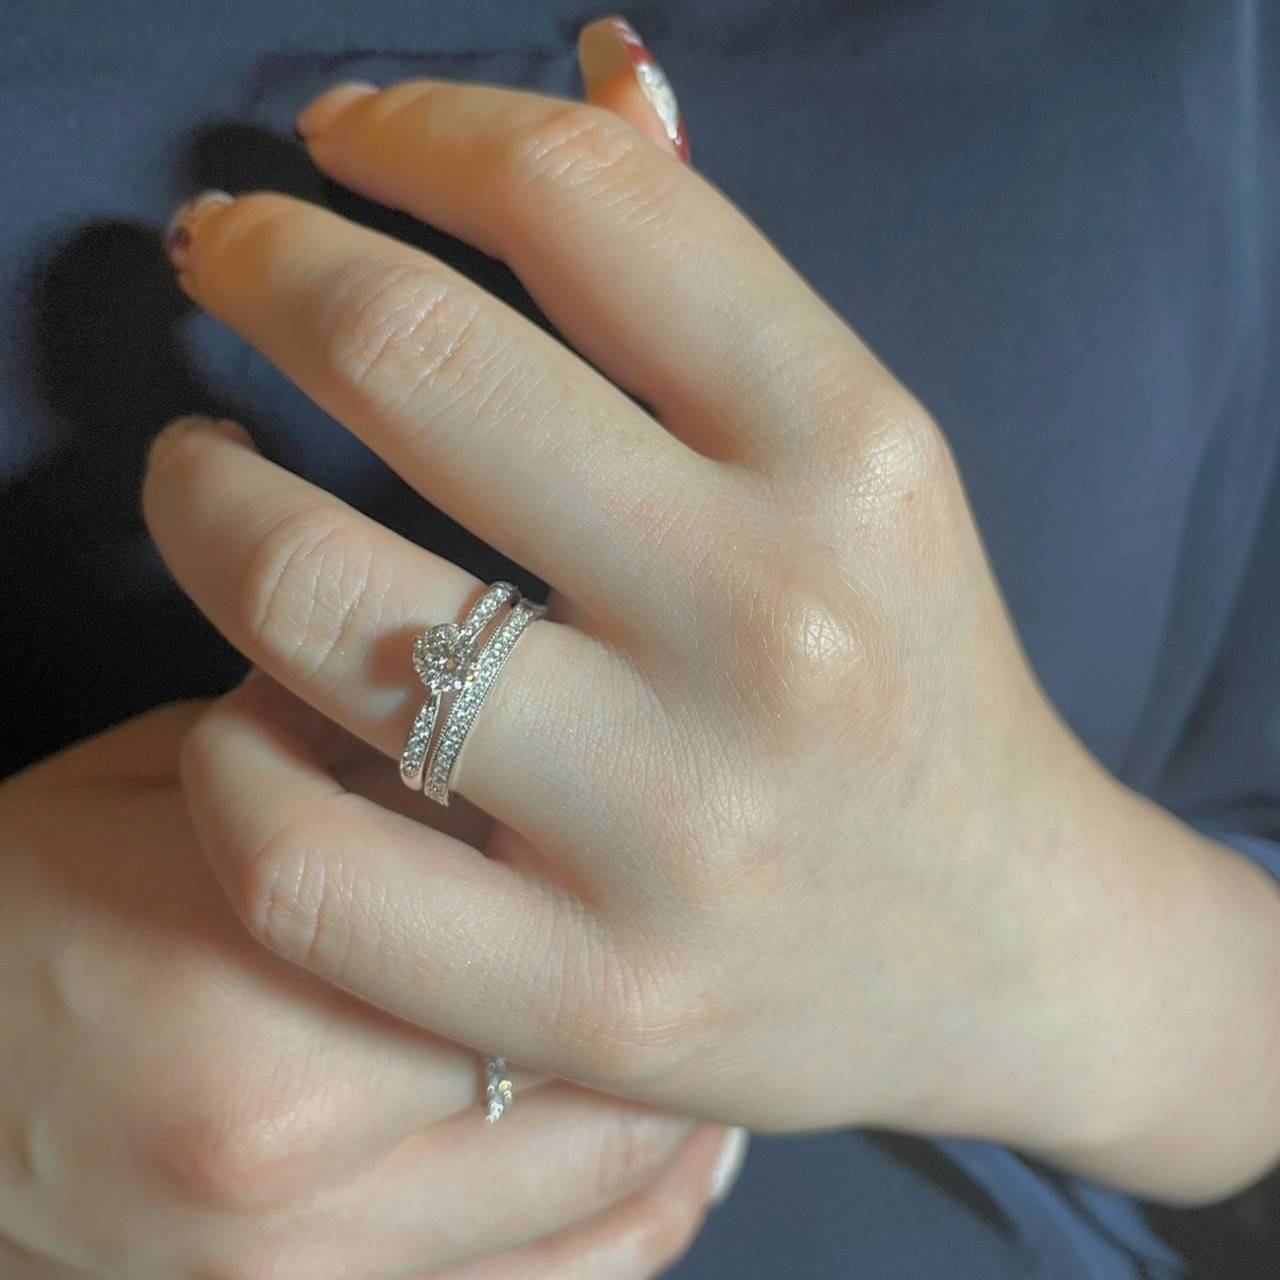 AntwerpbrilliantのSirius婚約指輪はエタニティリングの結婚指輪と重ねてもステキ